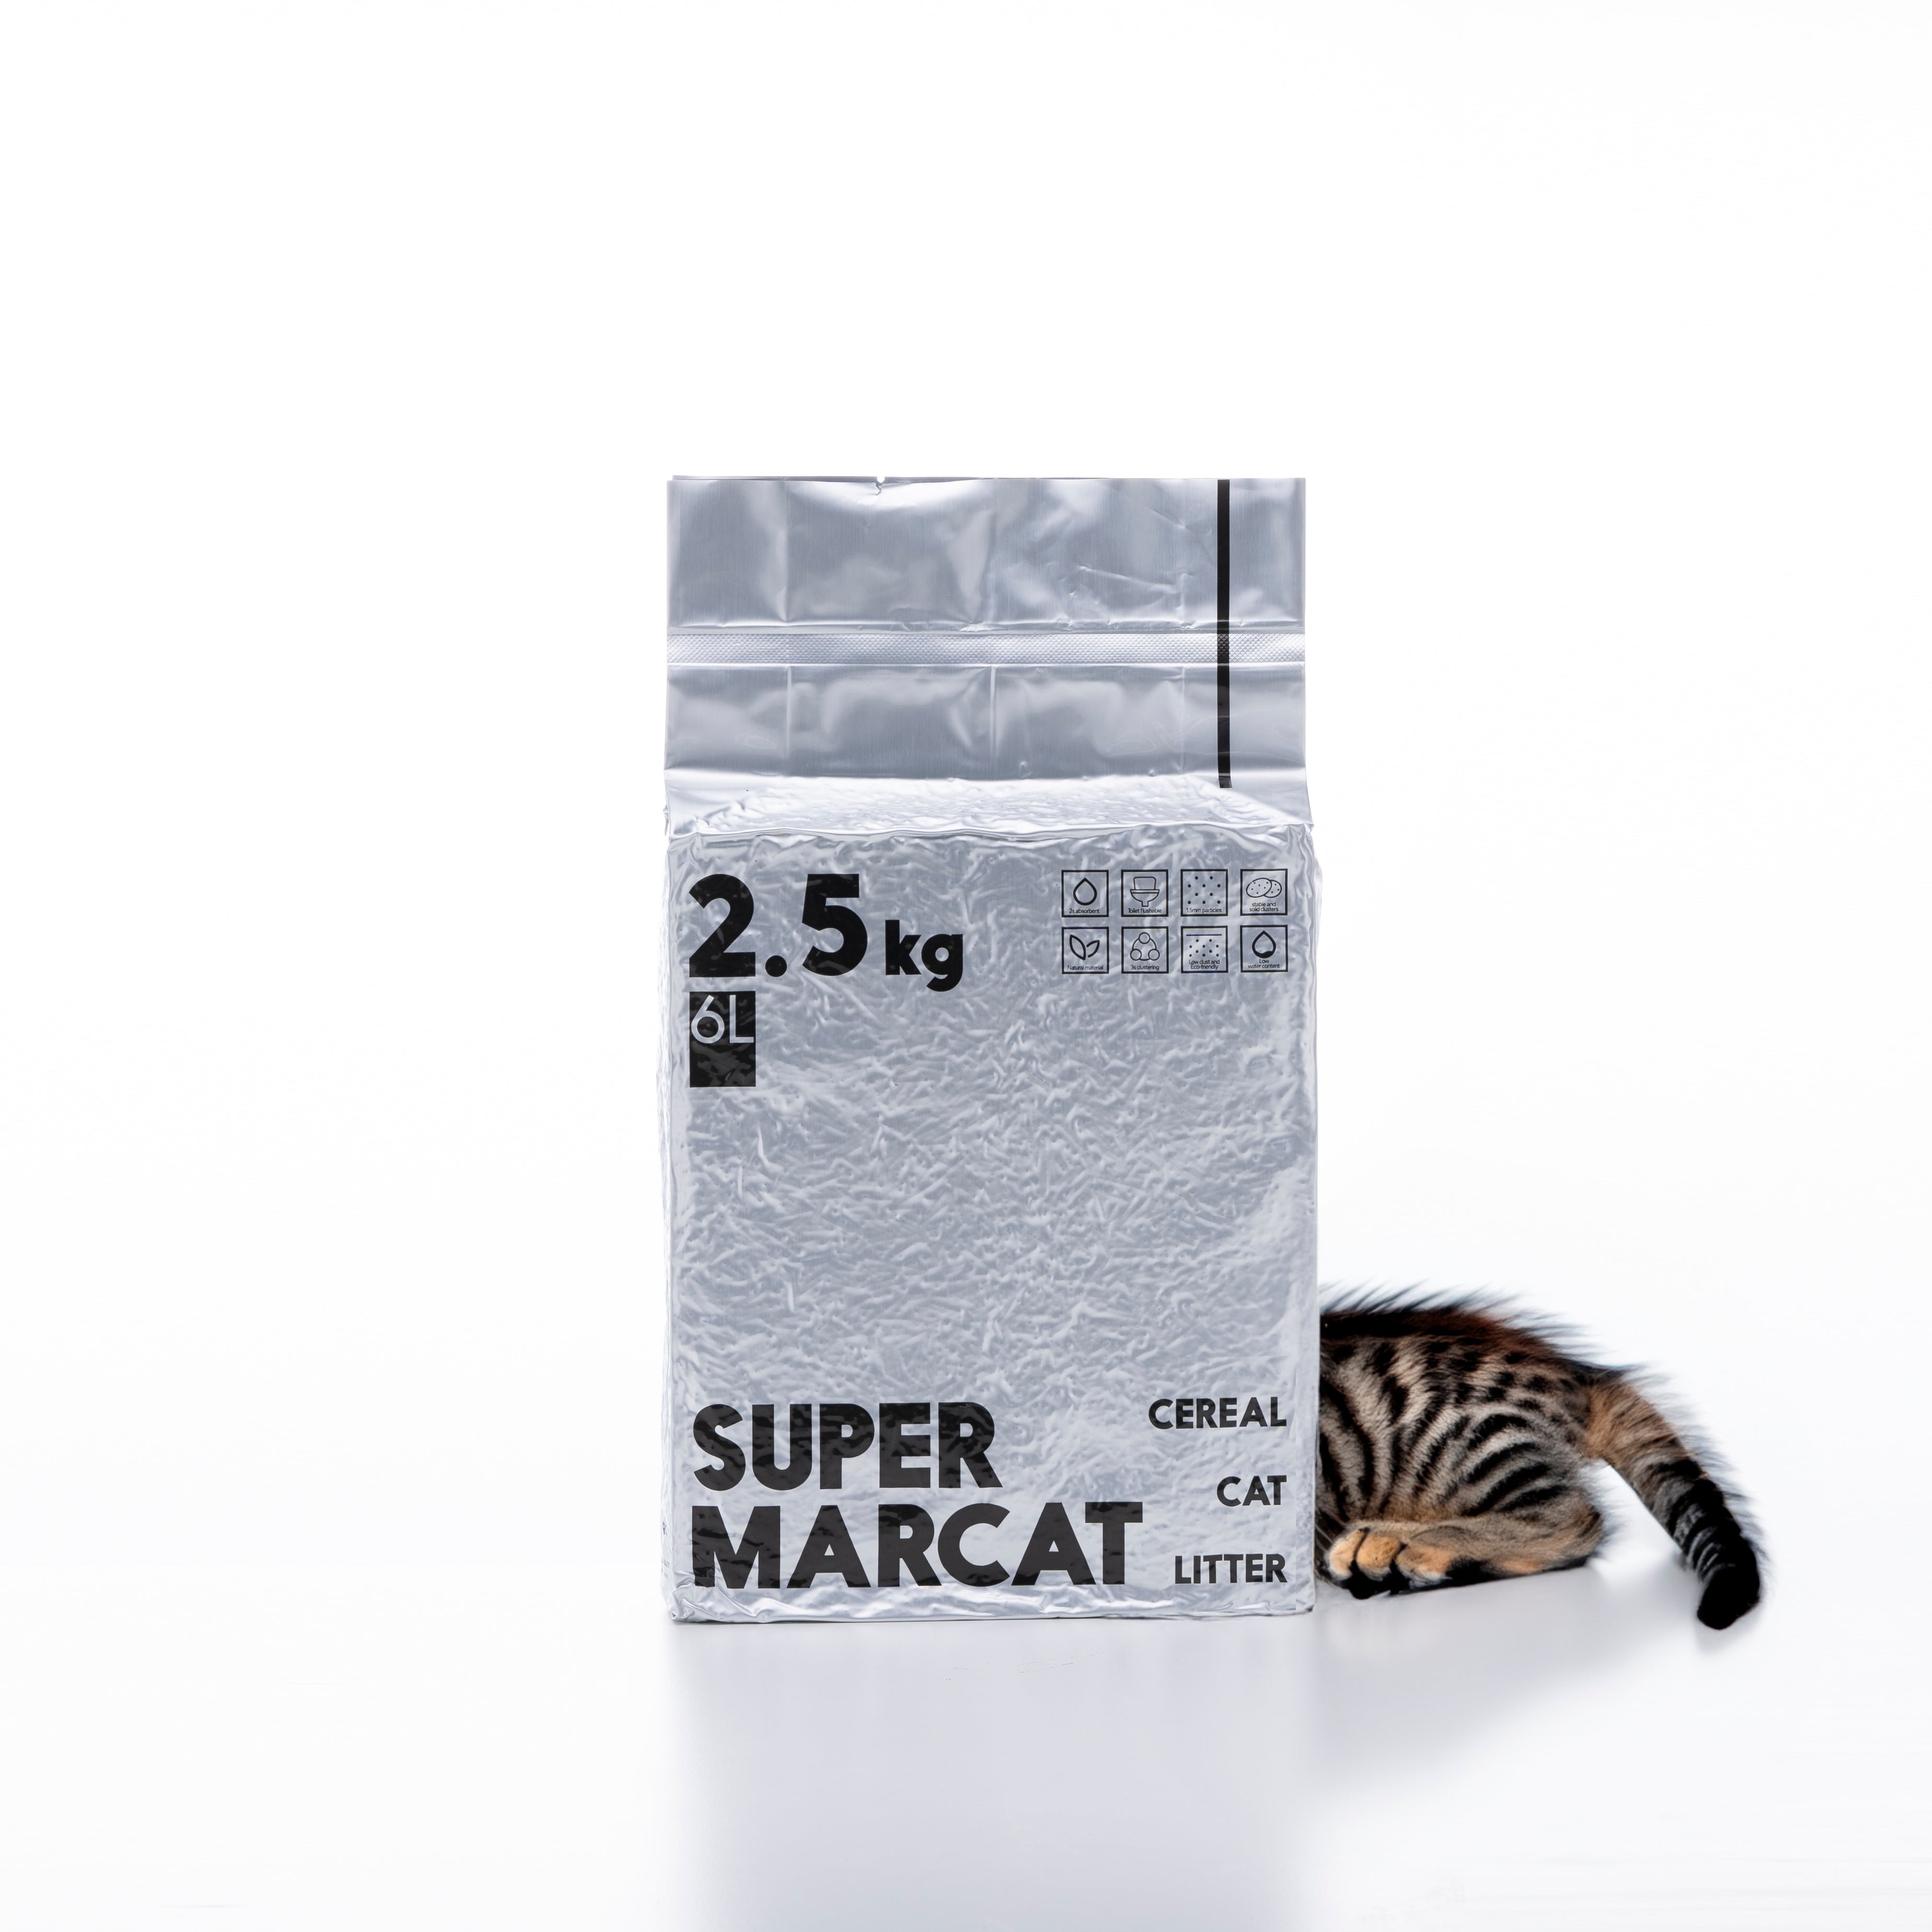 SupermarCat Eco Cereal Cat Litter Biodegradable 6L